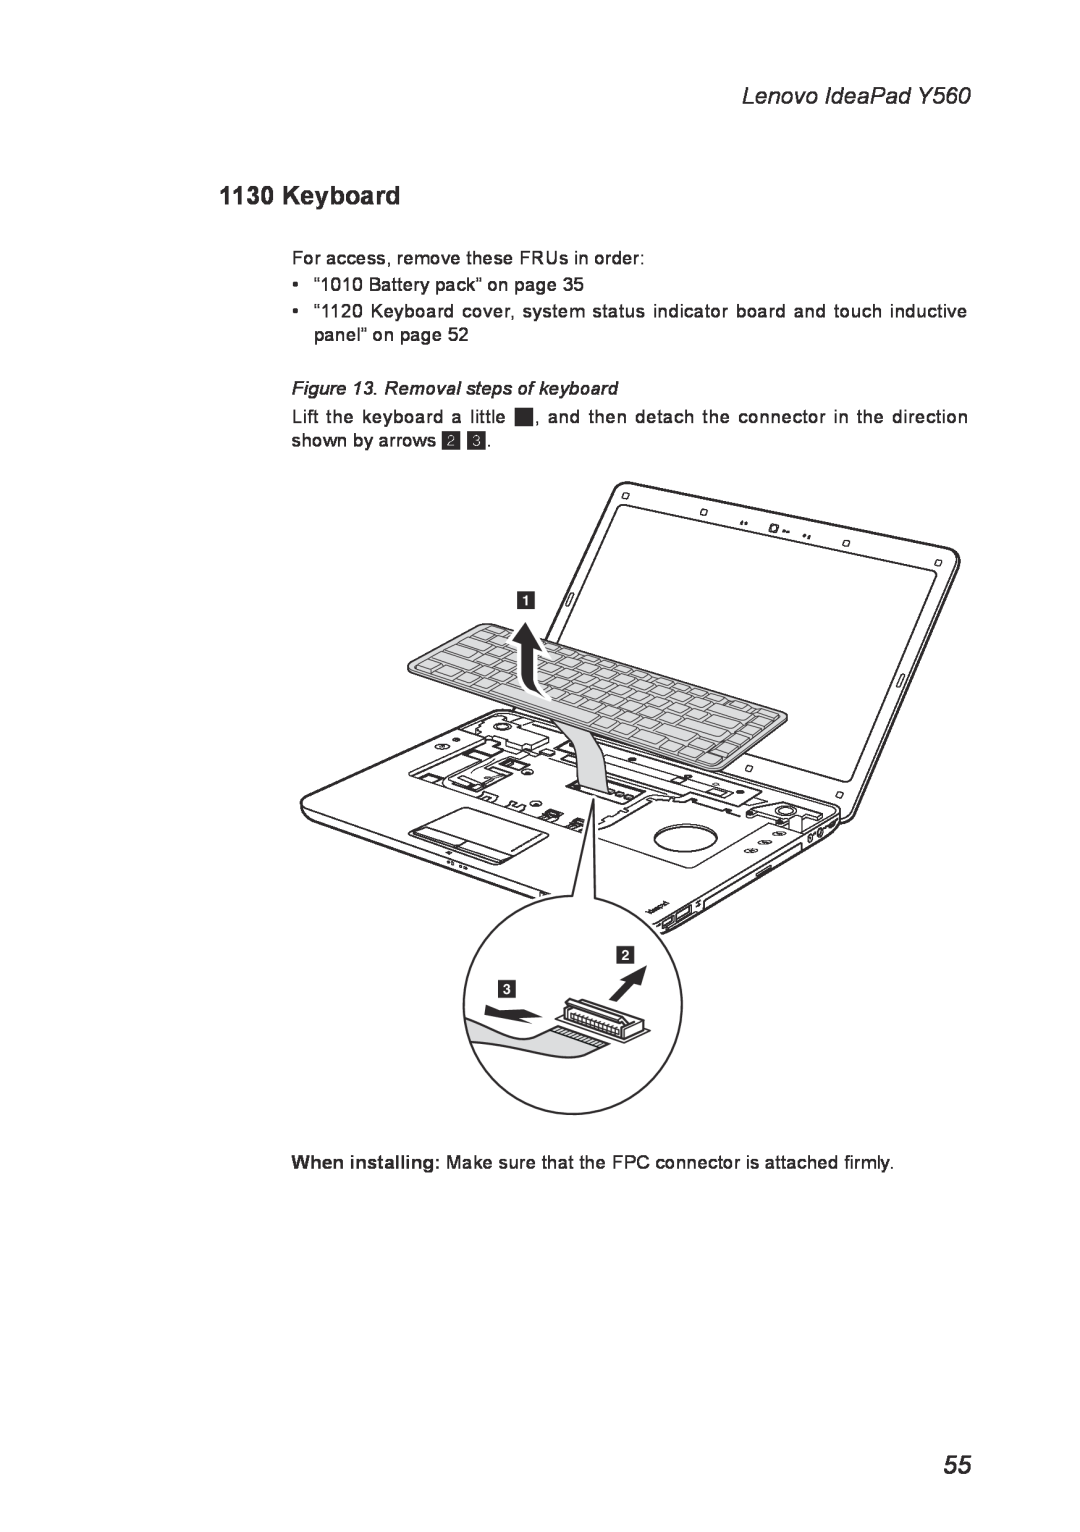 Lenovo manual Keyboard, Removal steps of keyboard, Lenovo IdeaPad Y560 